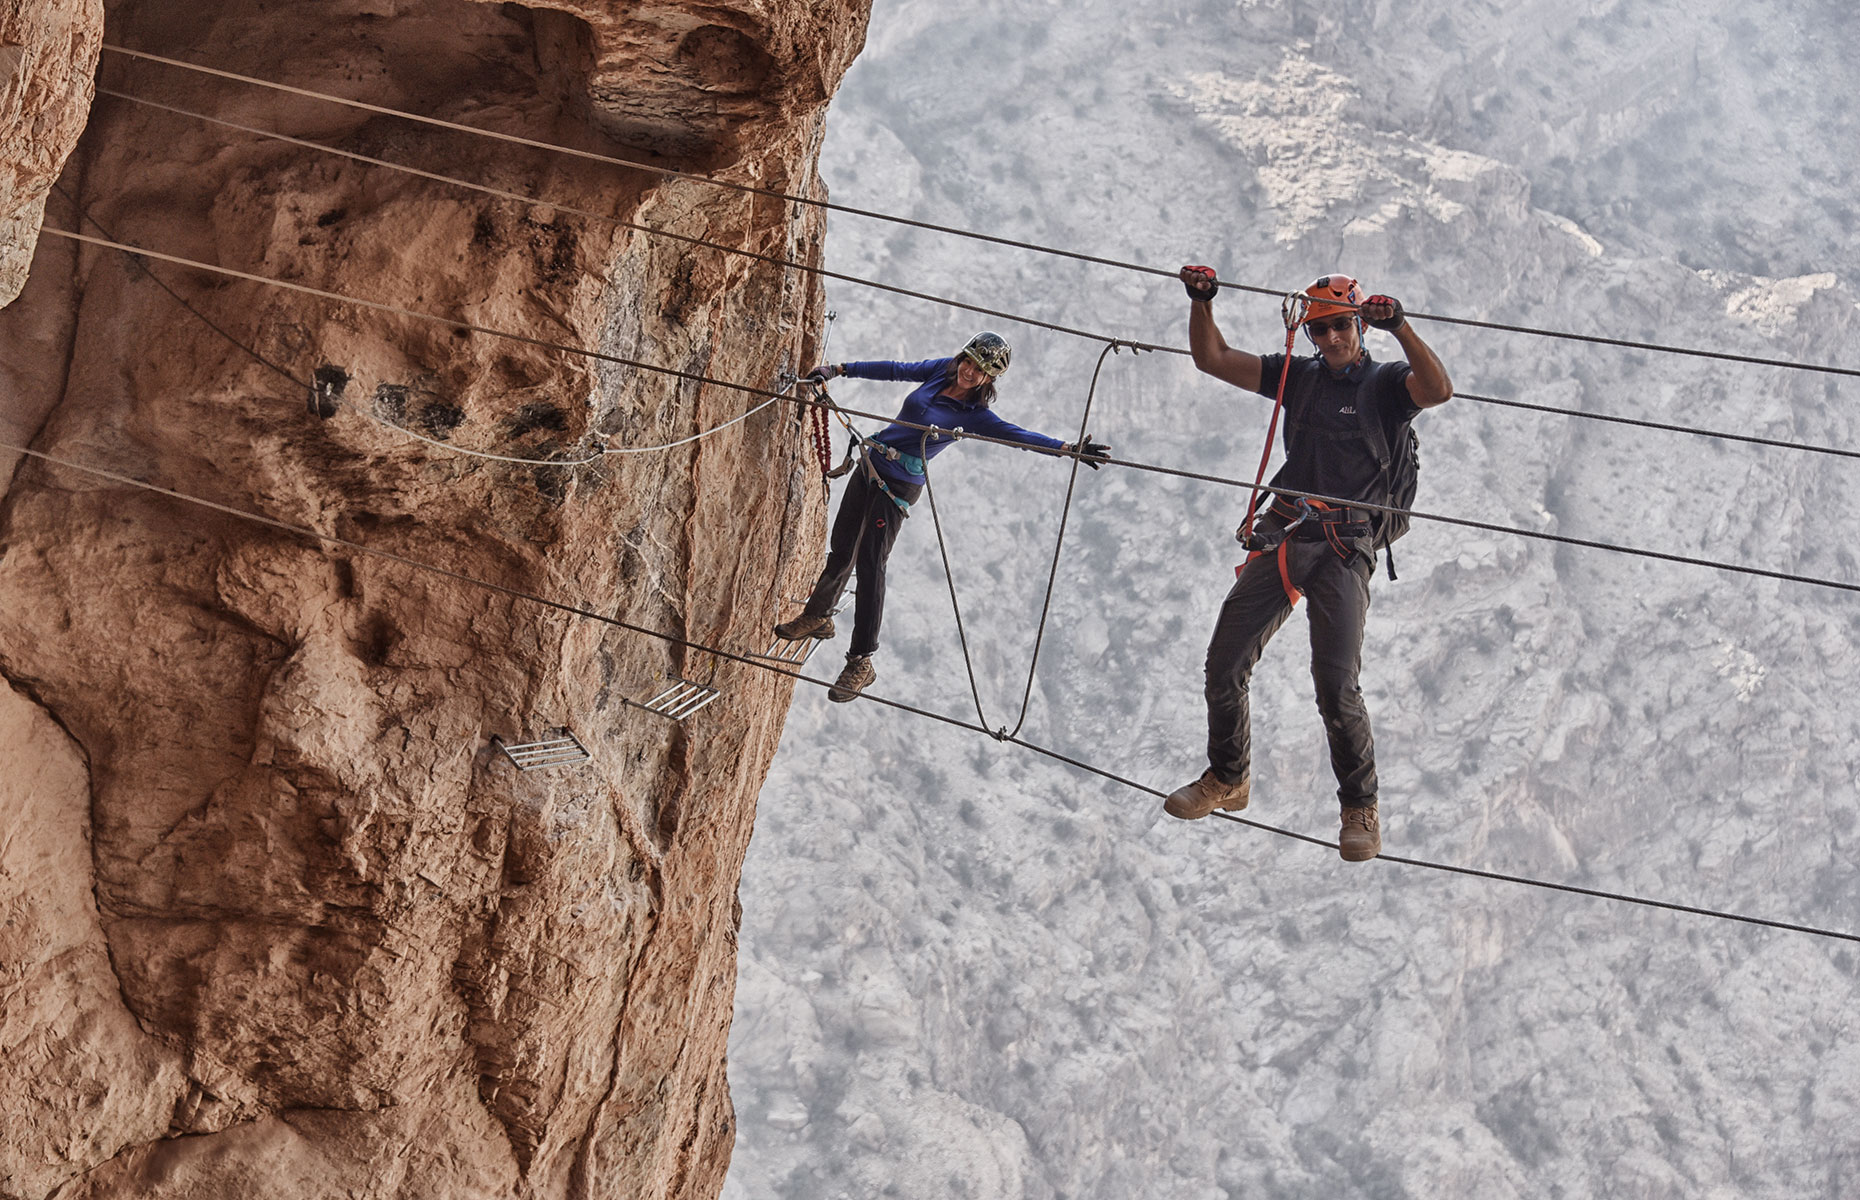 Alila Jabal Akhdar Via Ferrata climb (Image: Visit Oman) 